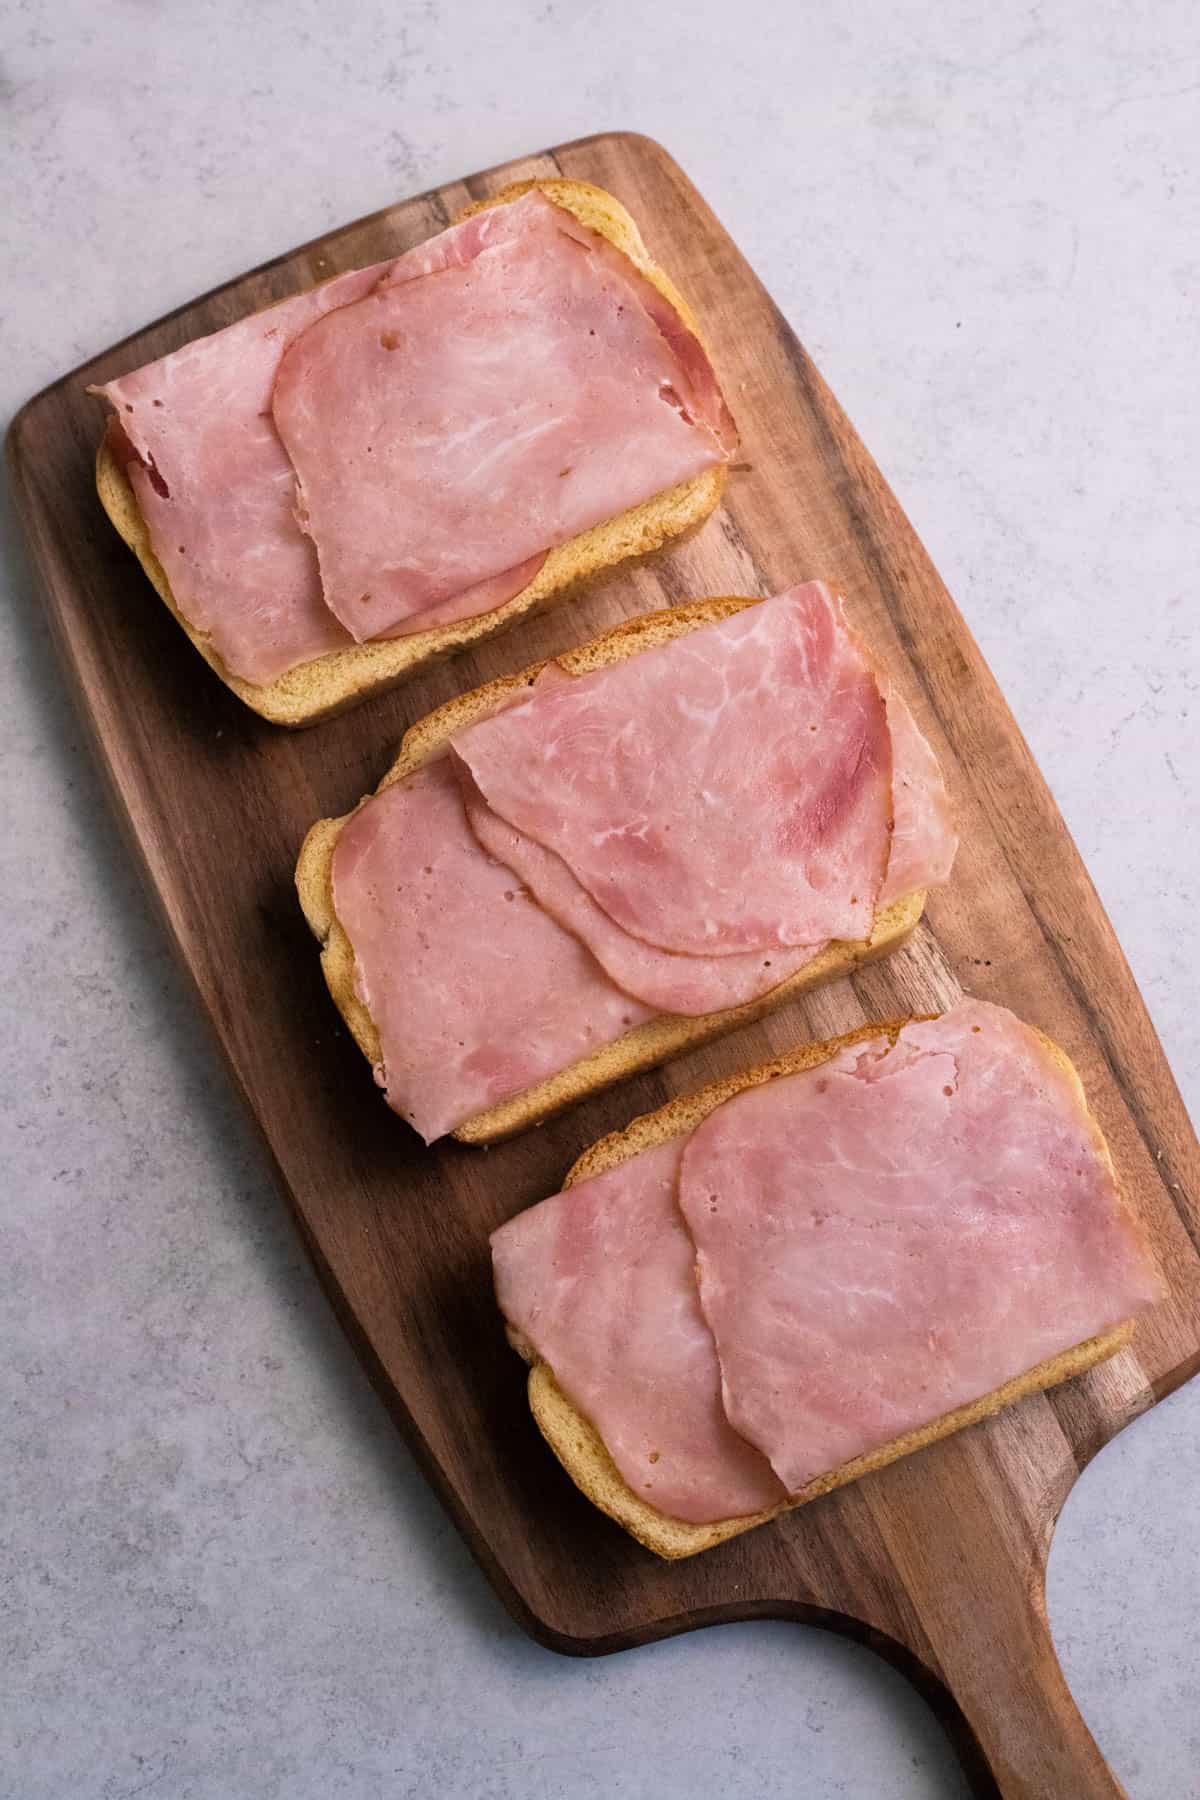 Monte Cristo Sandwiches with ham on top.